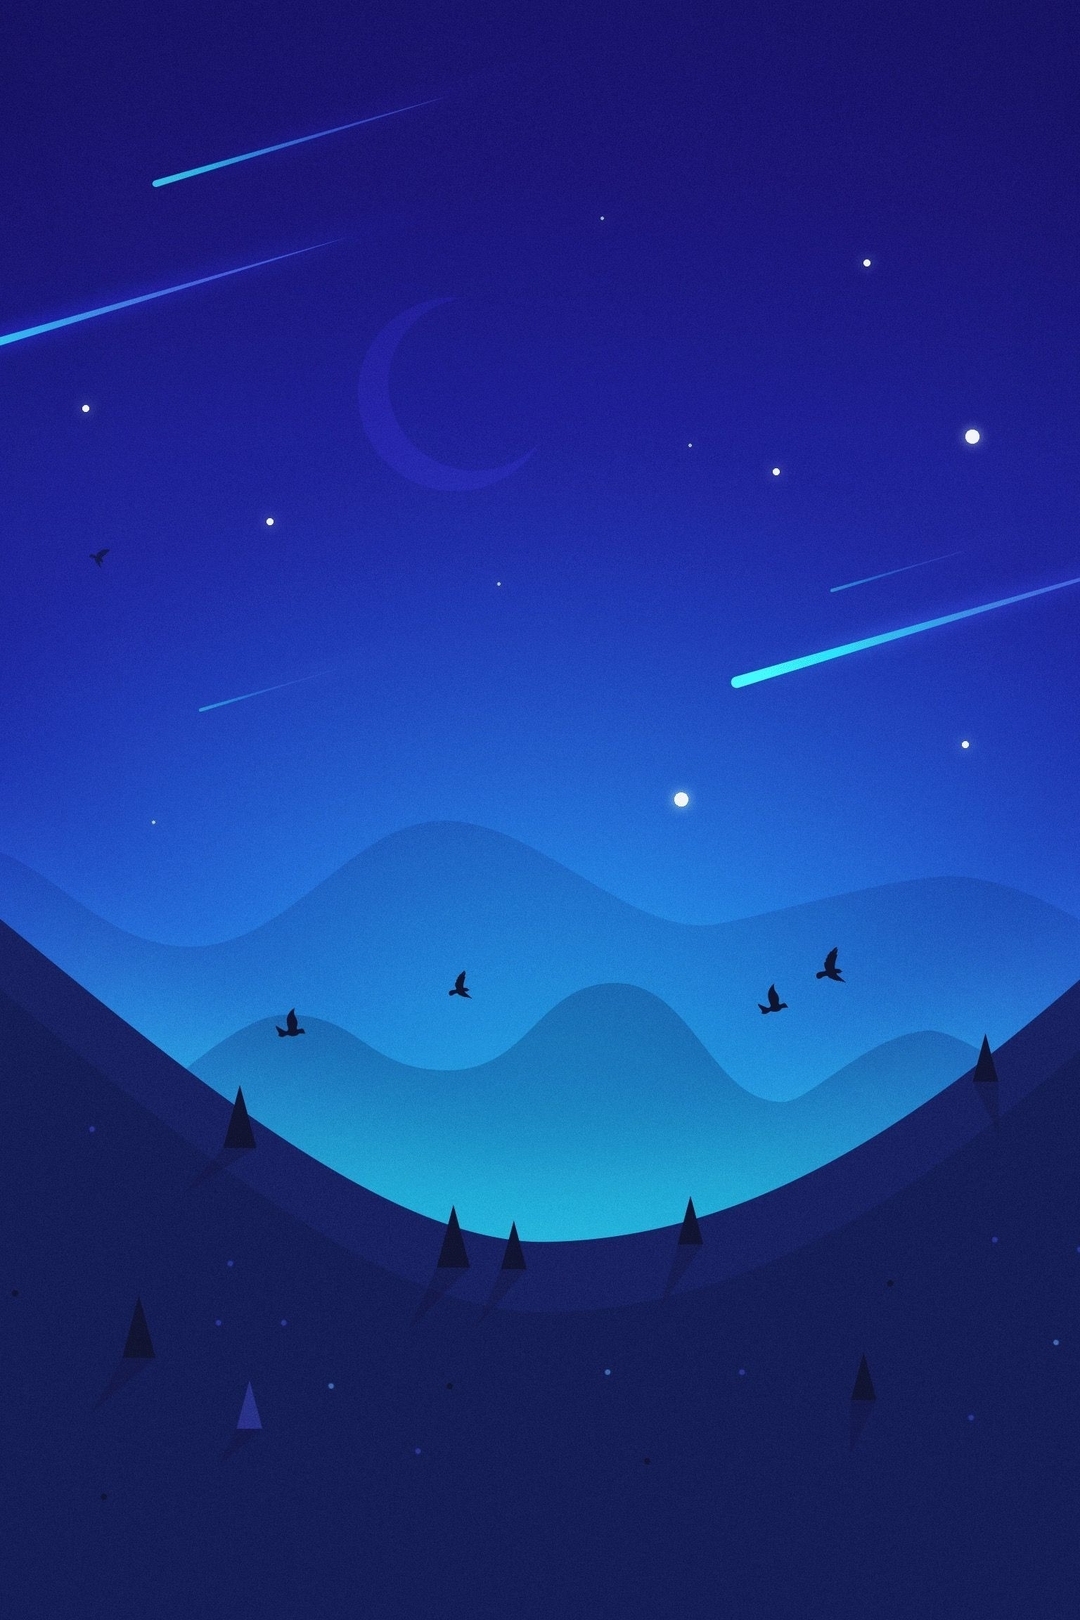 Image: Night, sky, stars, month, mountains, birds